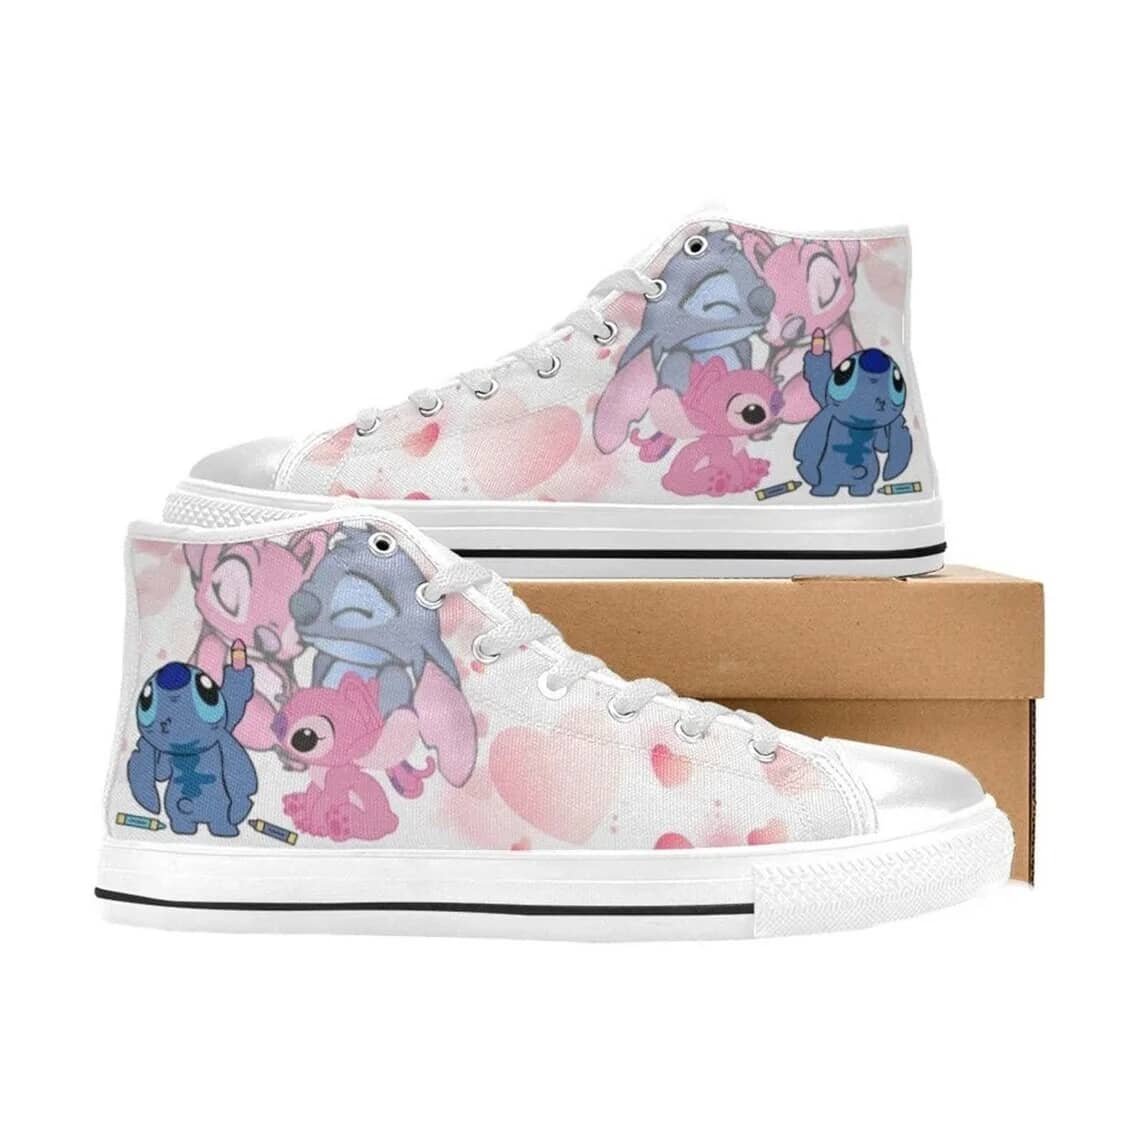 Stitch Style 3 Amazon Custom Disney High Top Shoes